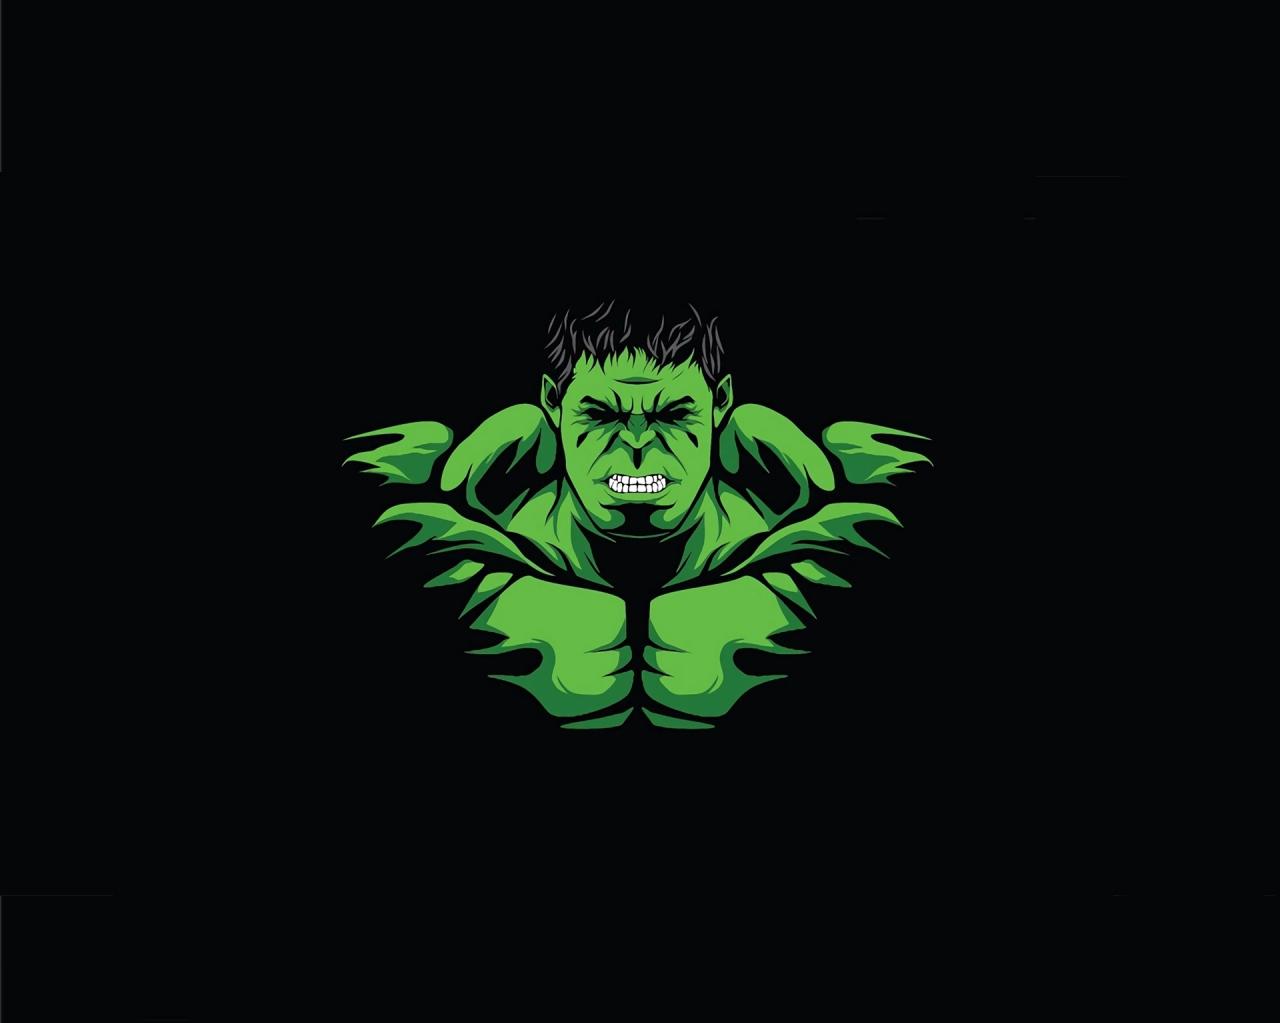 Download wallpaper 1280x1024 hulk angry green guy minimal